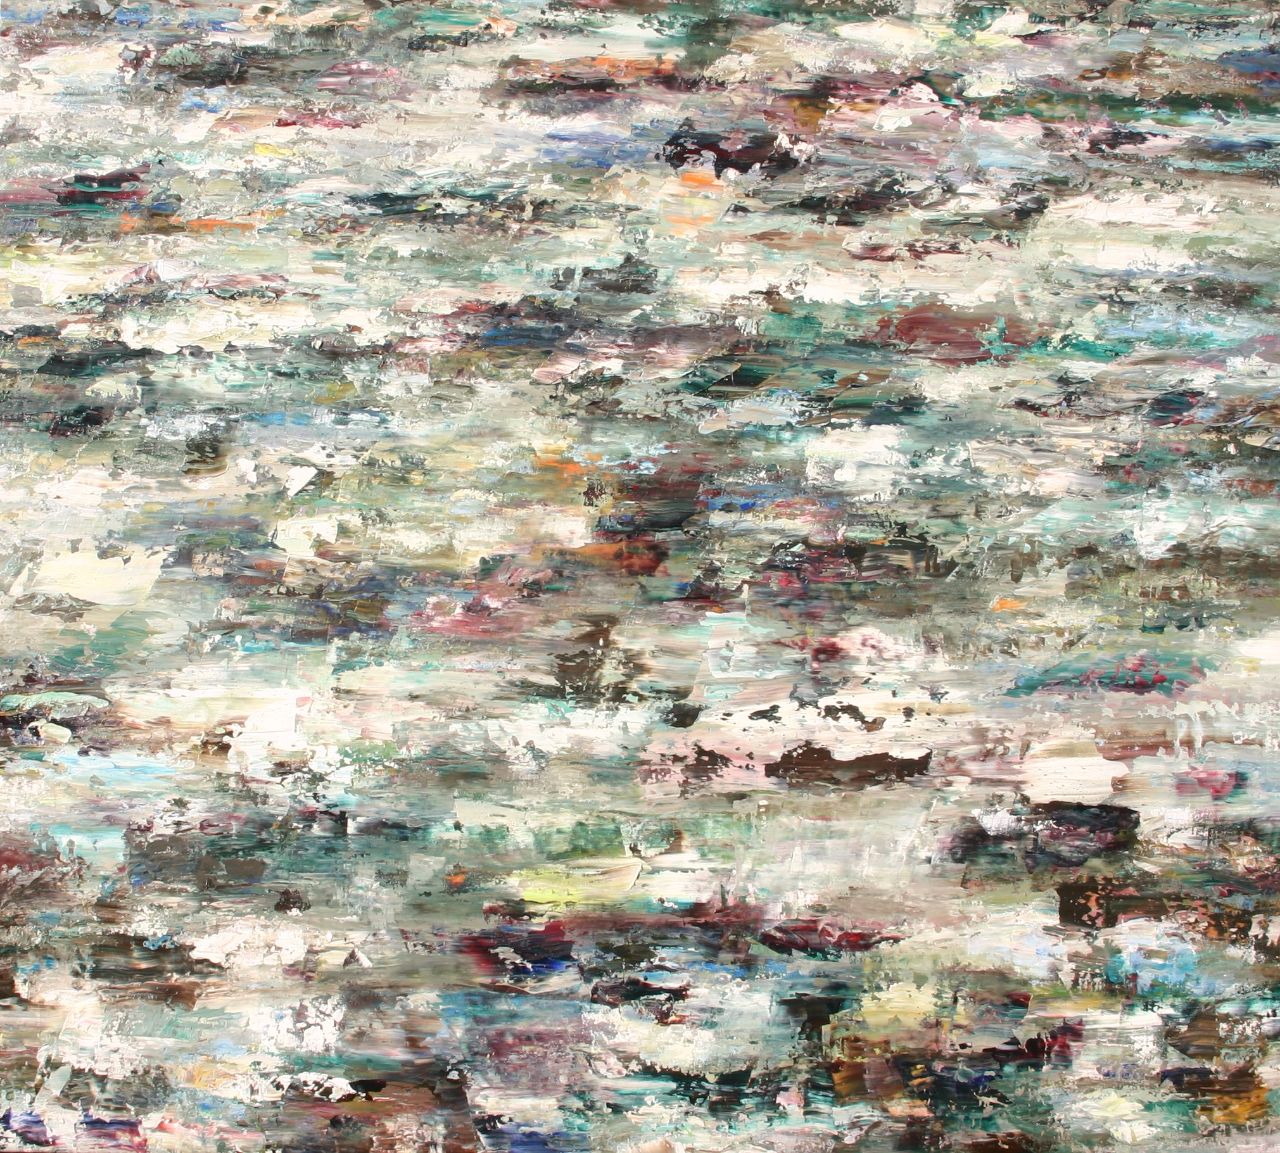 Rudi Weiss, Fluss, 26-2015, Öl auf Leinwand, 130 cm x 145 cm, wer048ko